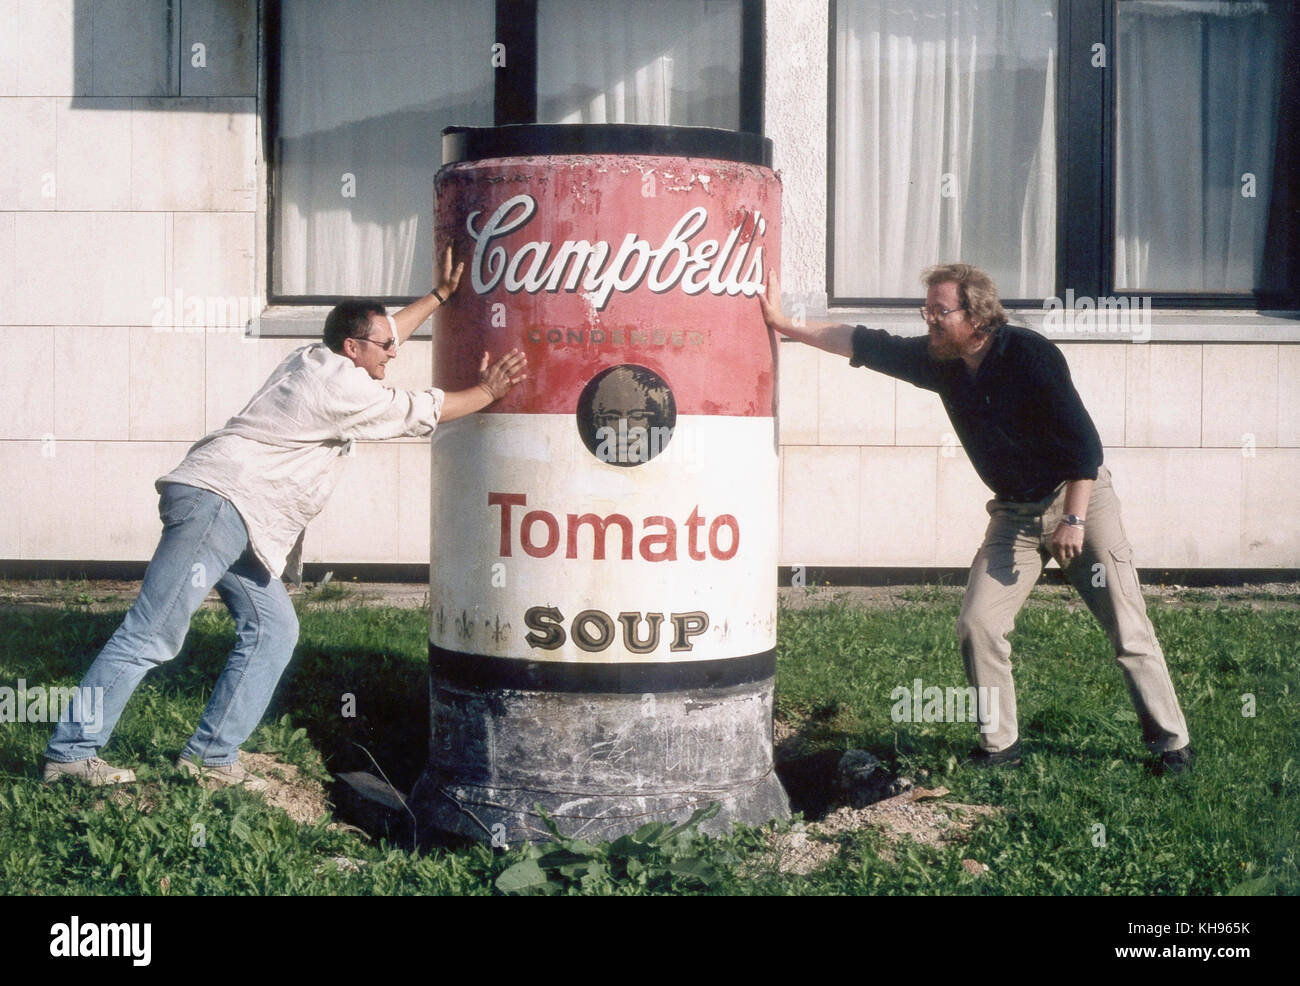 About Warhola, Fernsehdokumentation, Deutschland 2001, Regie: Stanislaw Mucha, Szenenfoto mit Warhols Campbells Tomato Soup Dose Stock Photo